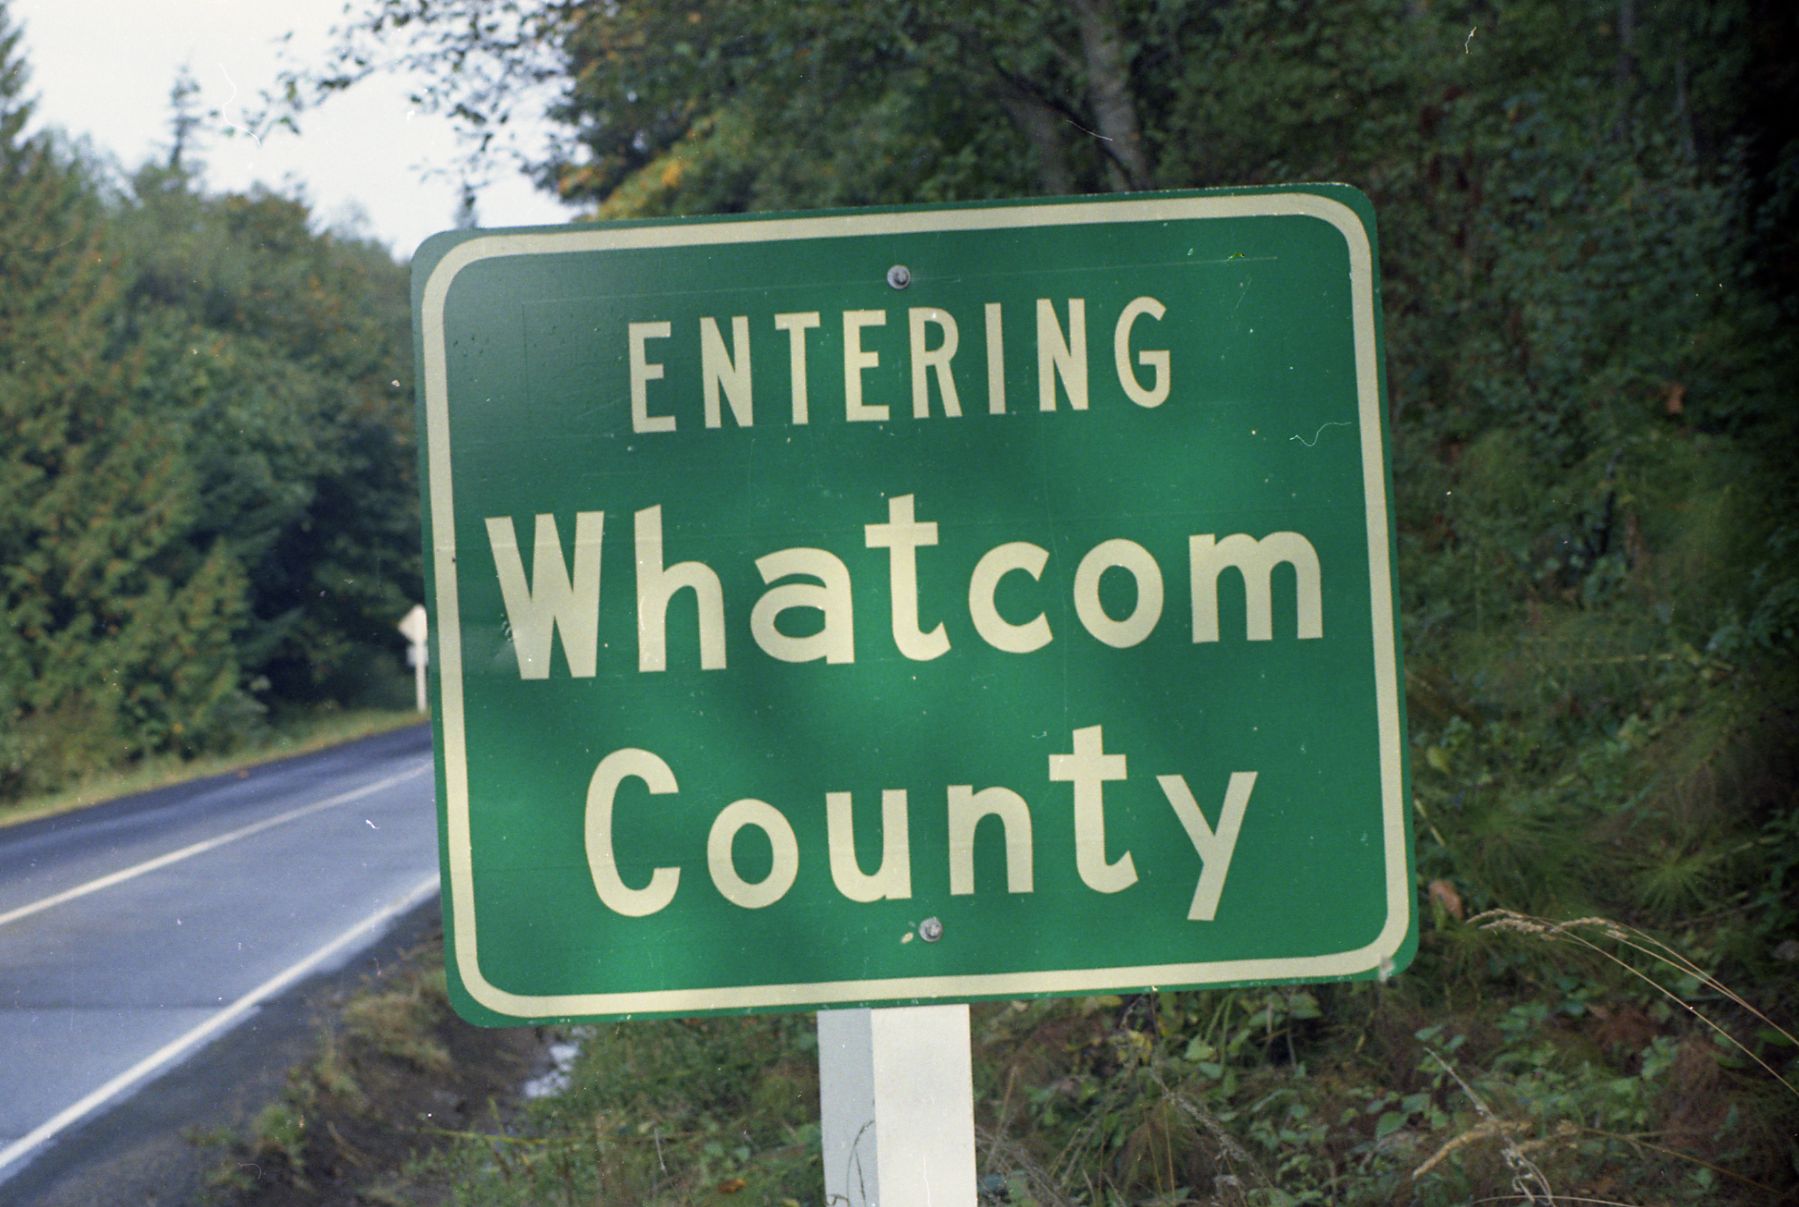 Whatcom County, by George Louis, cc.